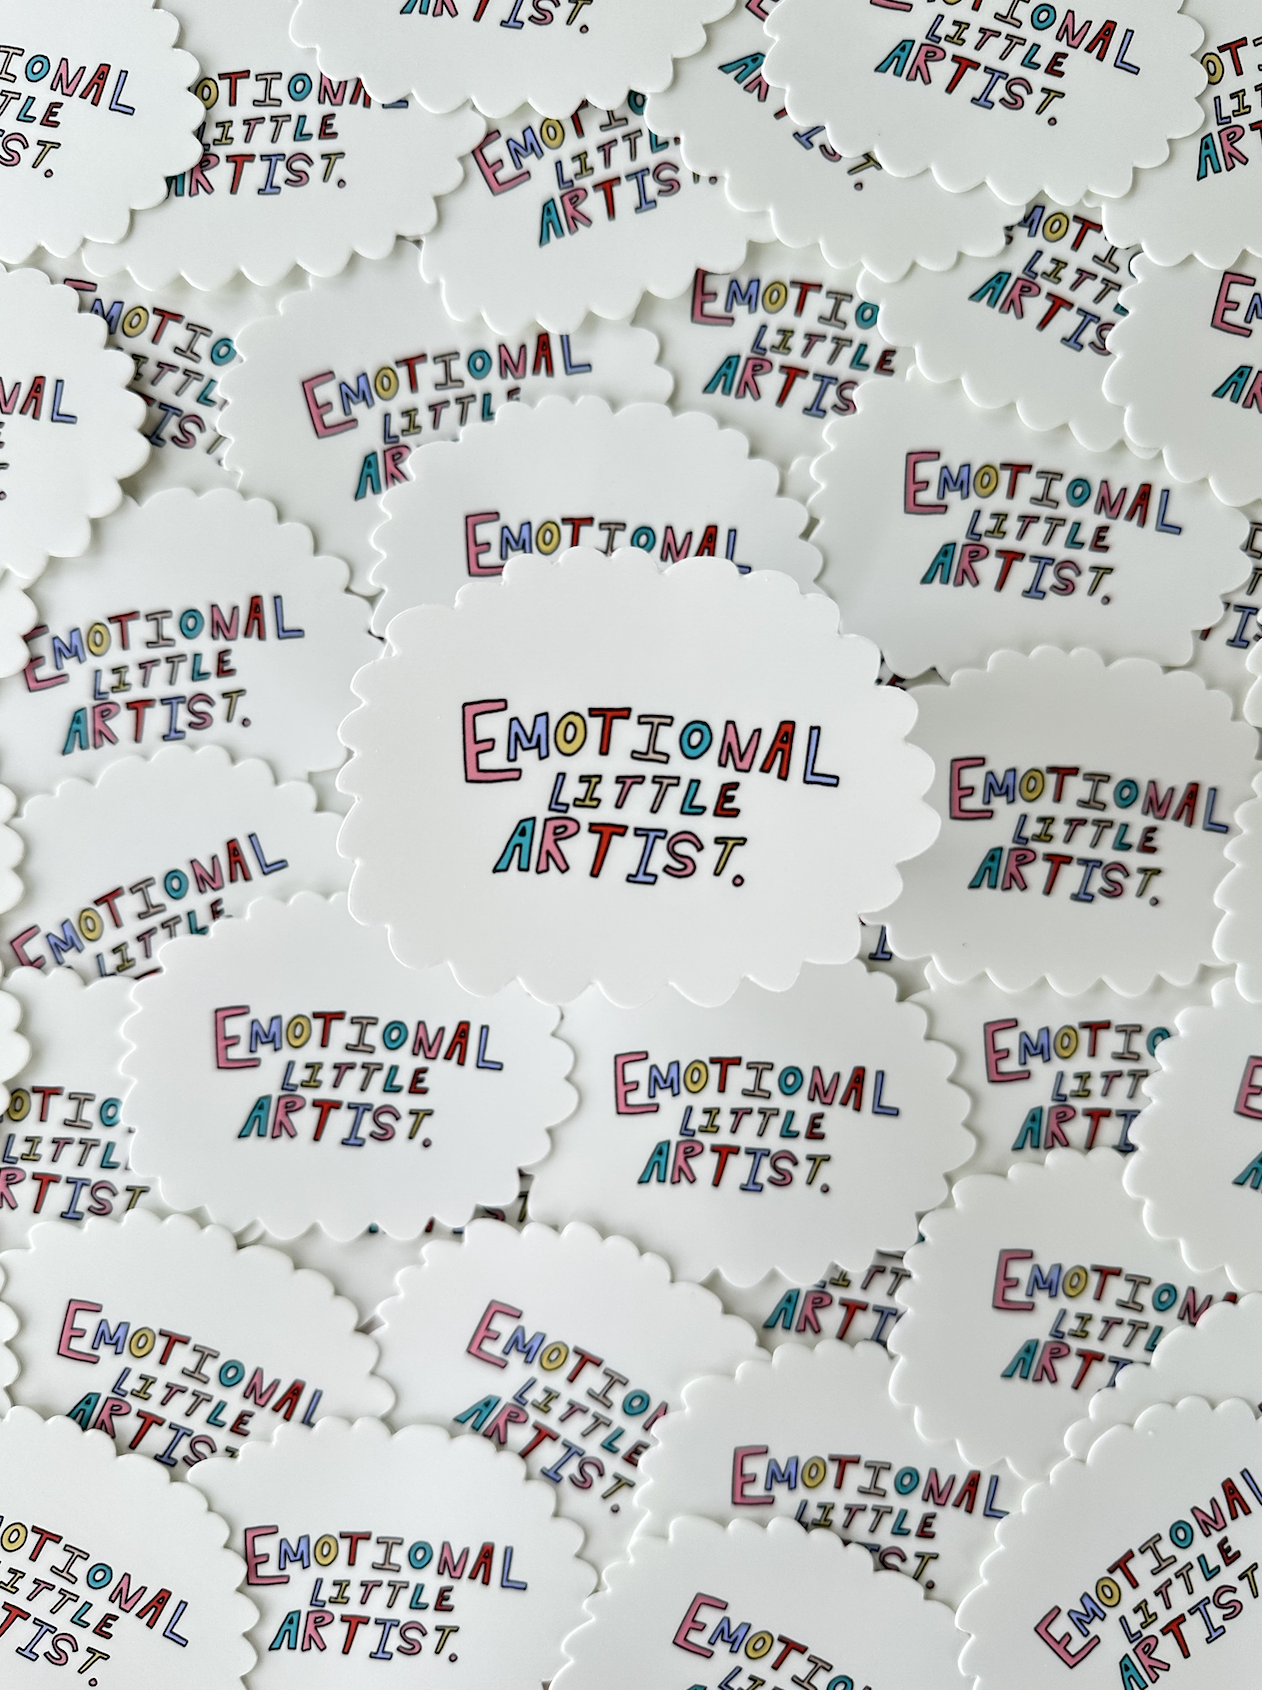 emotional little artist sticker